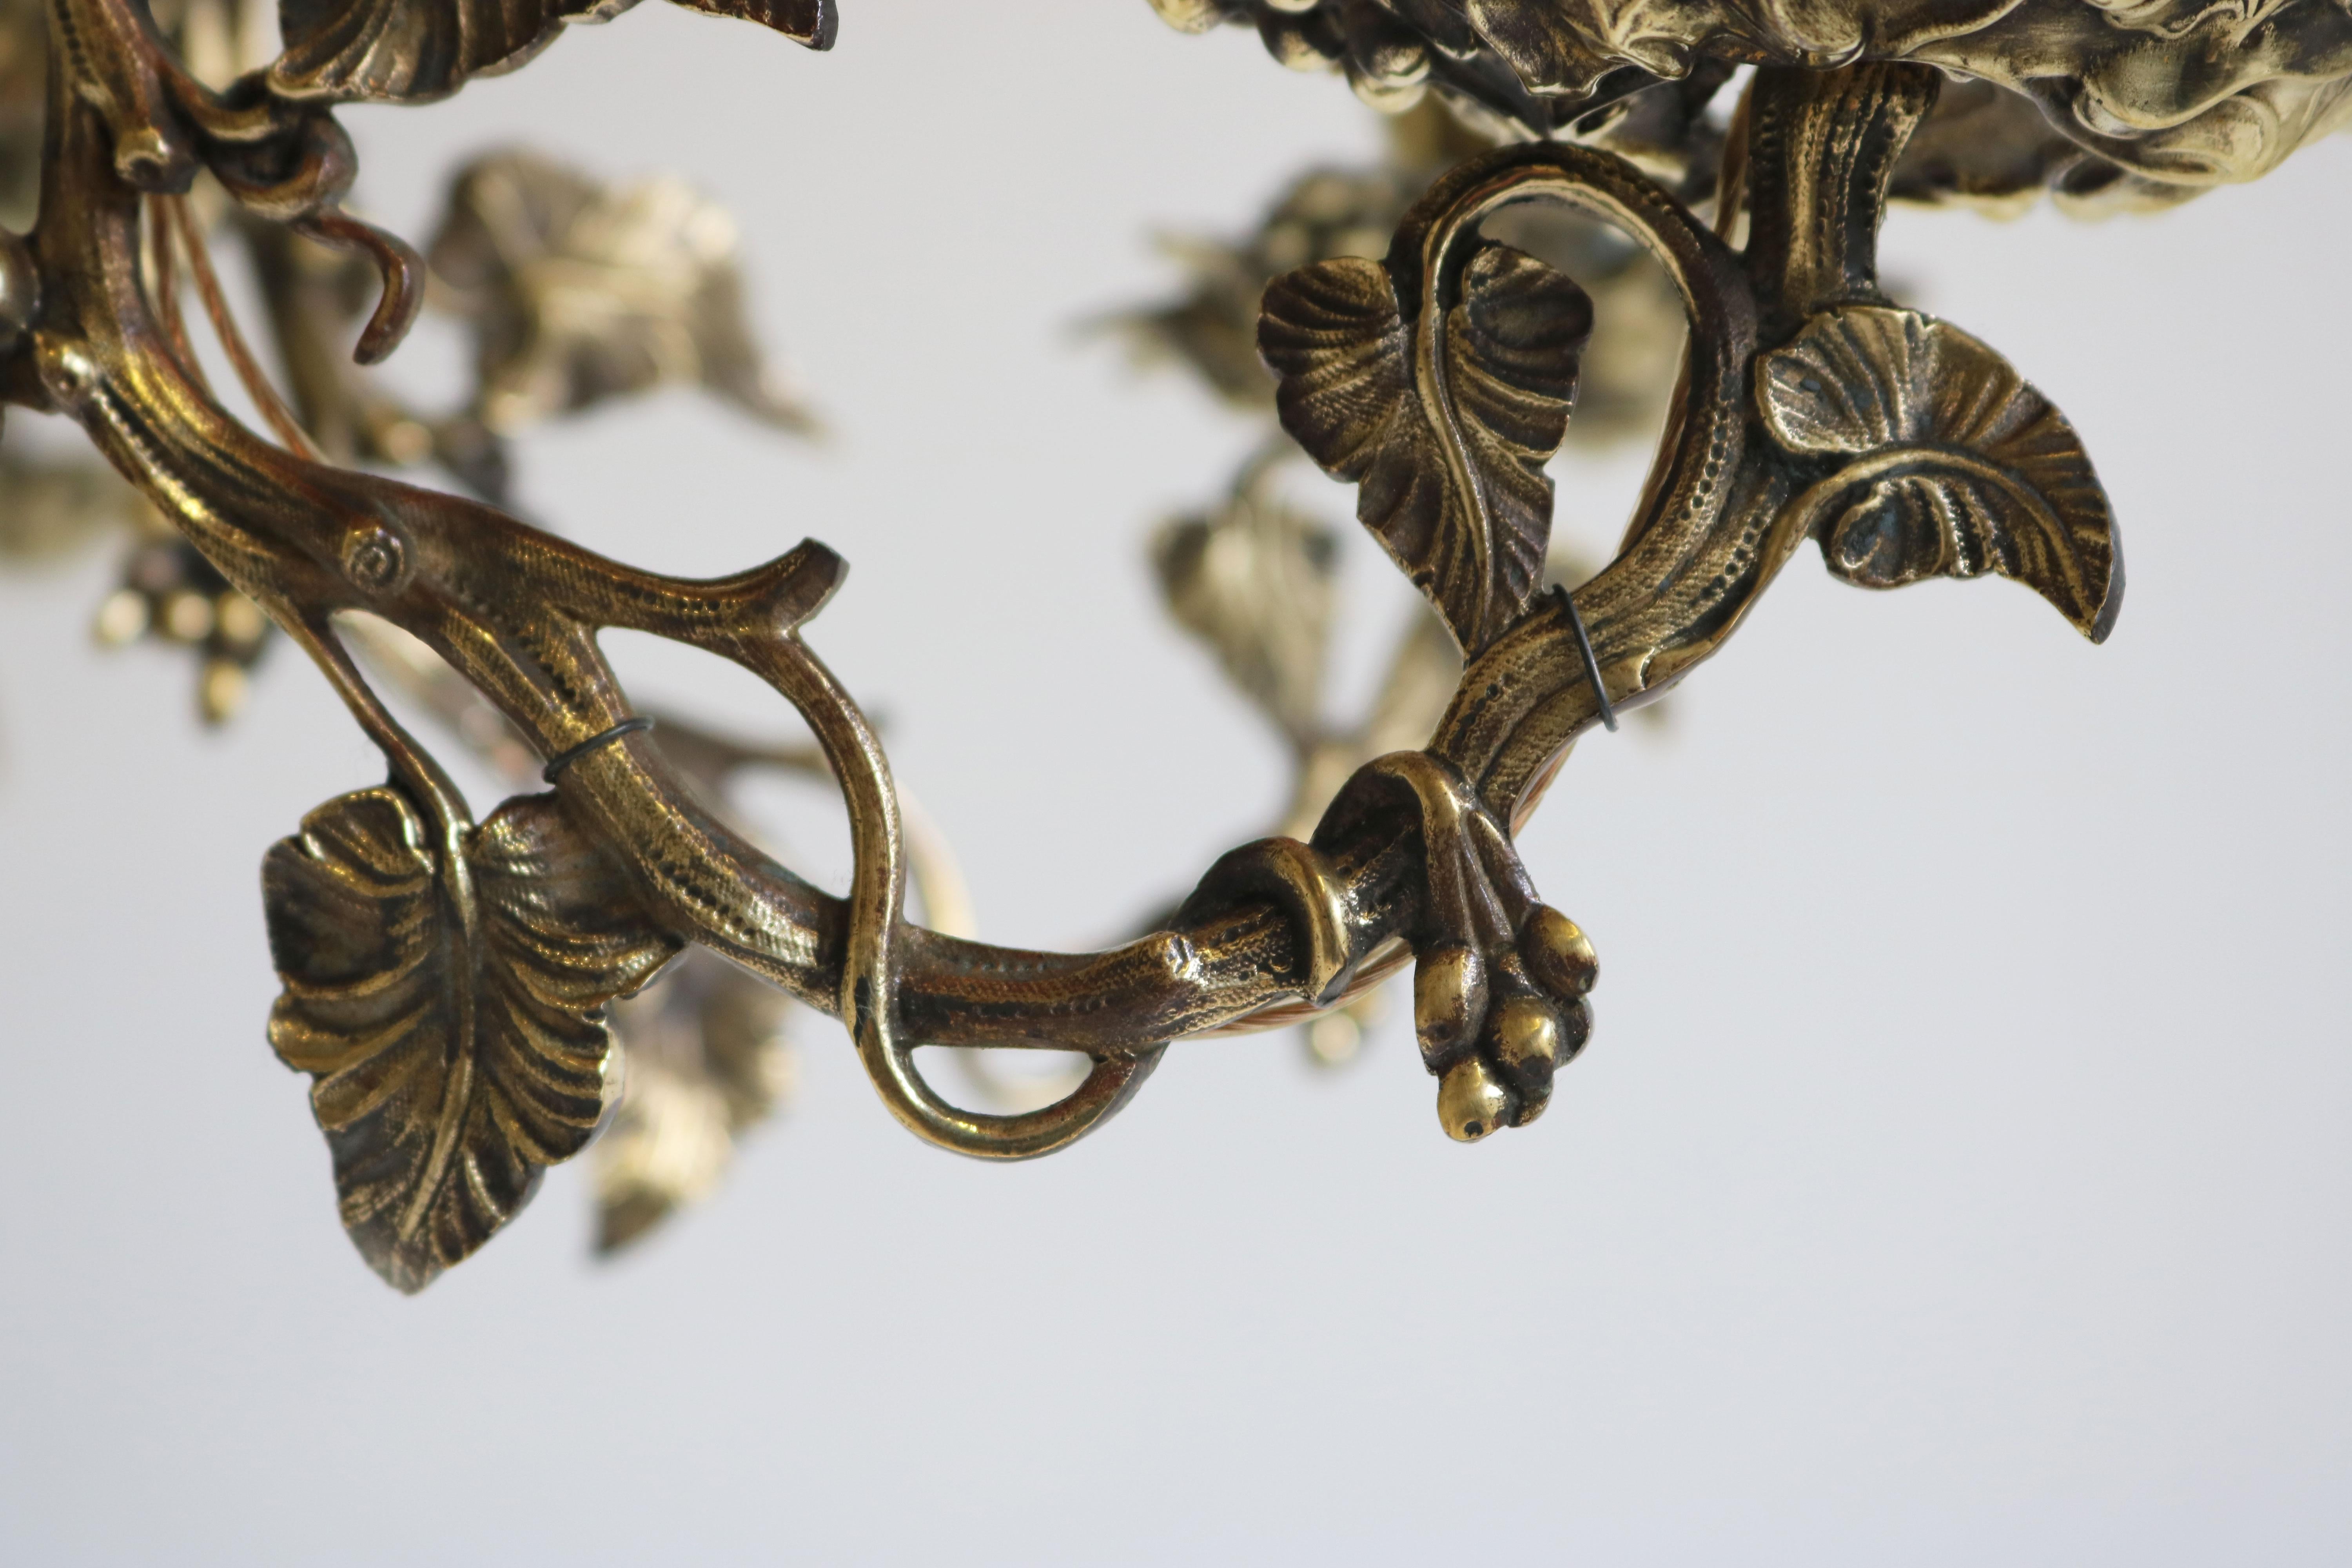 French Art Nouveau Hammered Brass Chandelier 1890 Antique 8 Lights Gold Floral In Good Condition For Sale In Ijzendijke, NL